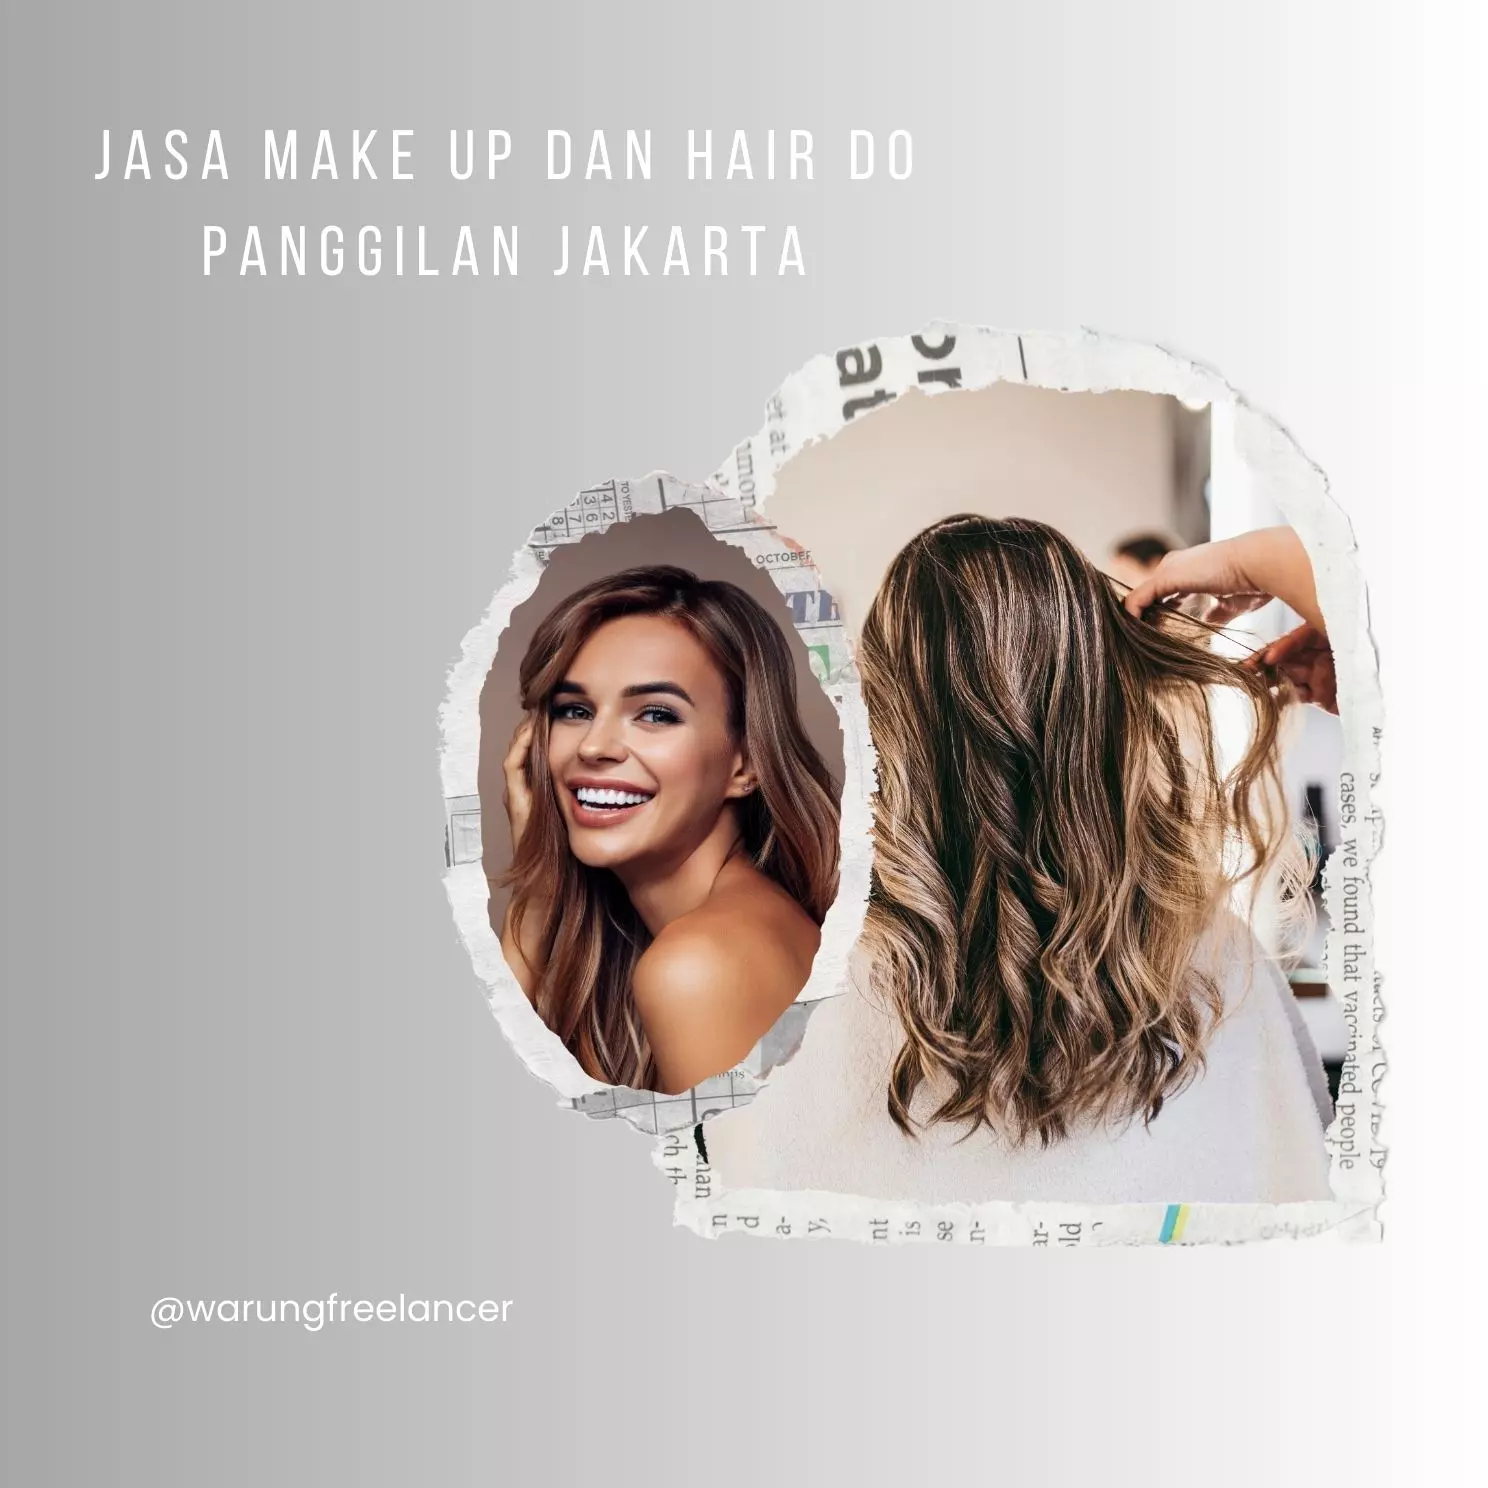 Pengertian Jasa Make Up dan Hair Do Panggilan Jakarta